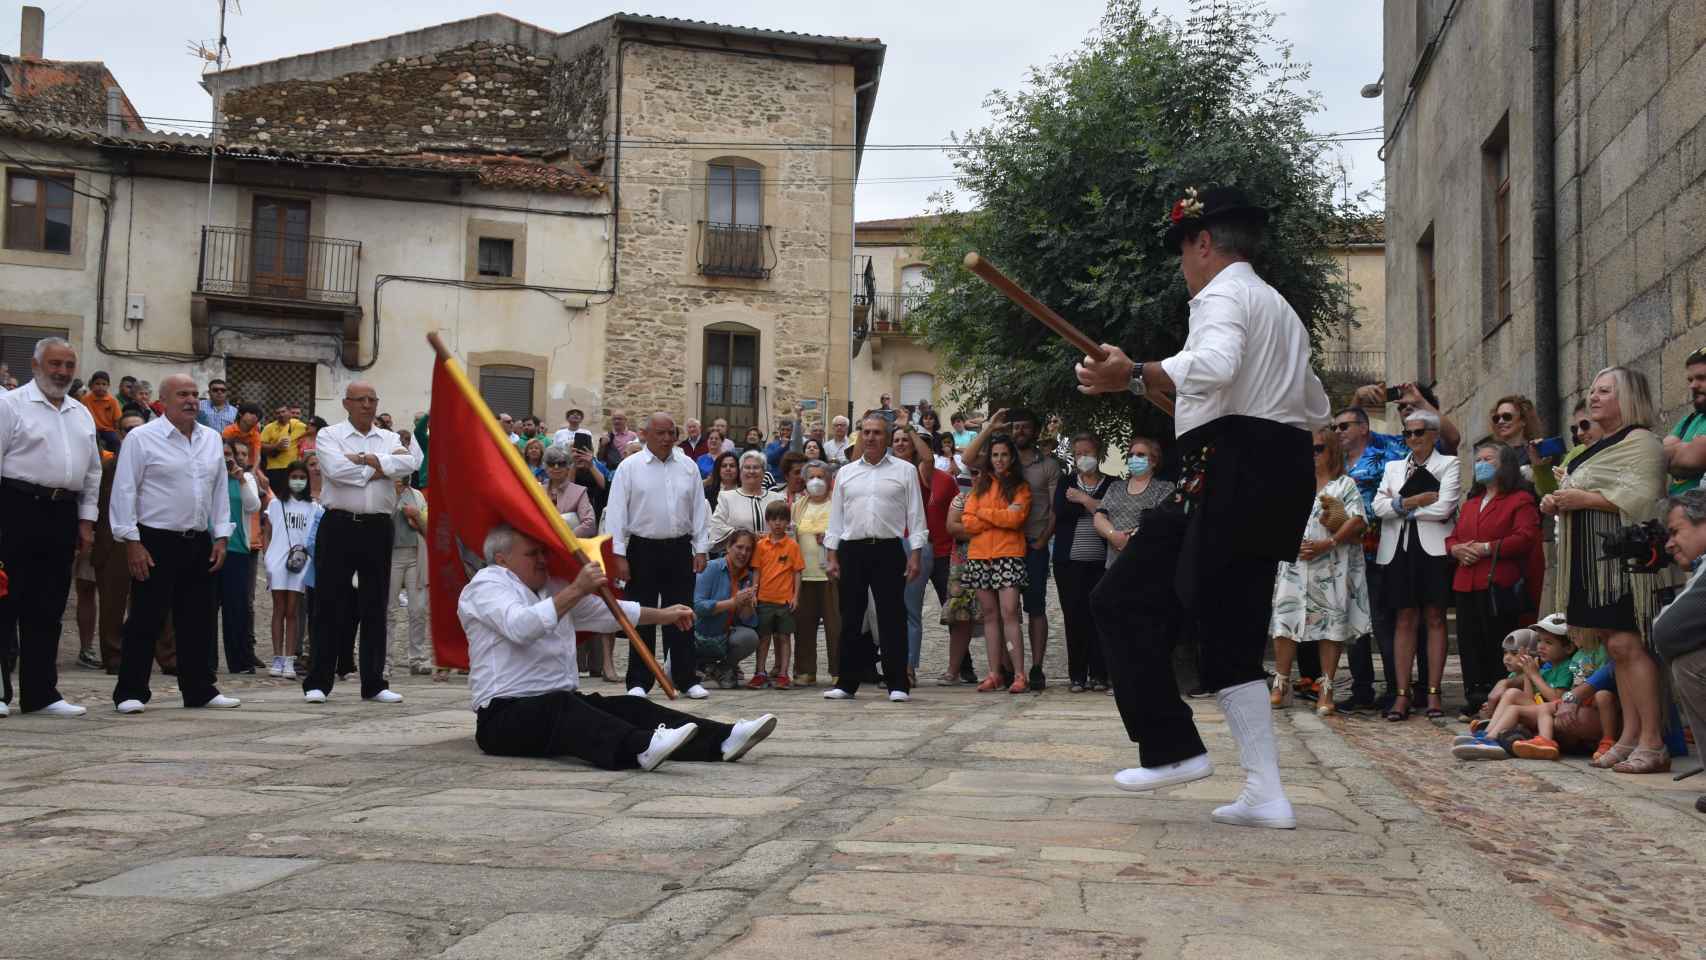 'Echado' o baile de la bandera en Hinojosa de Duero por San Juan